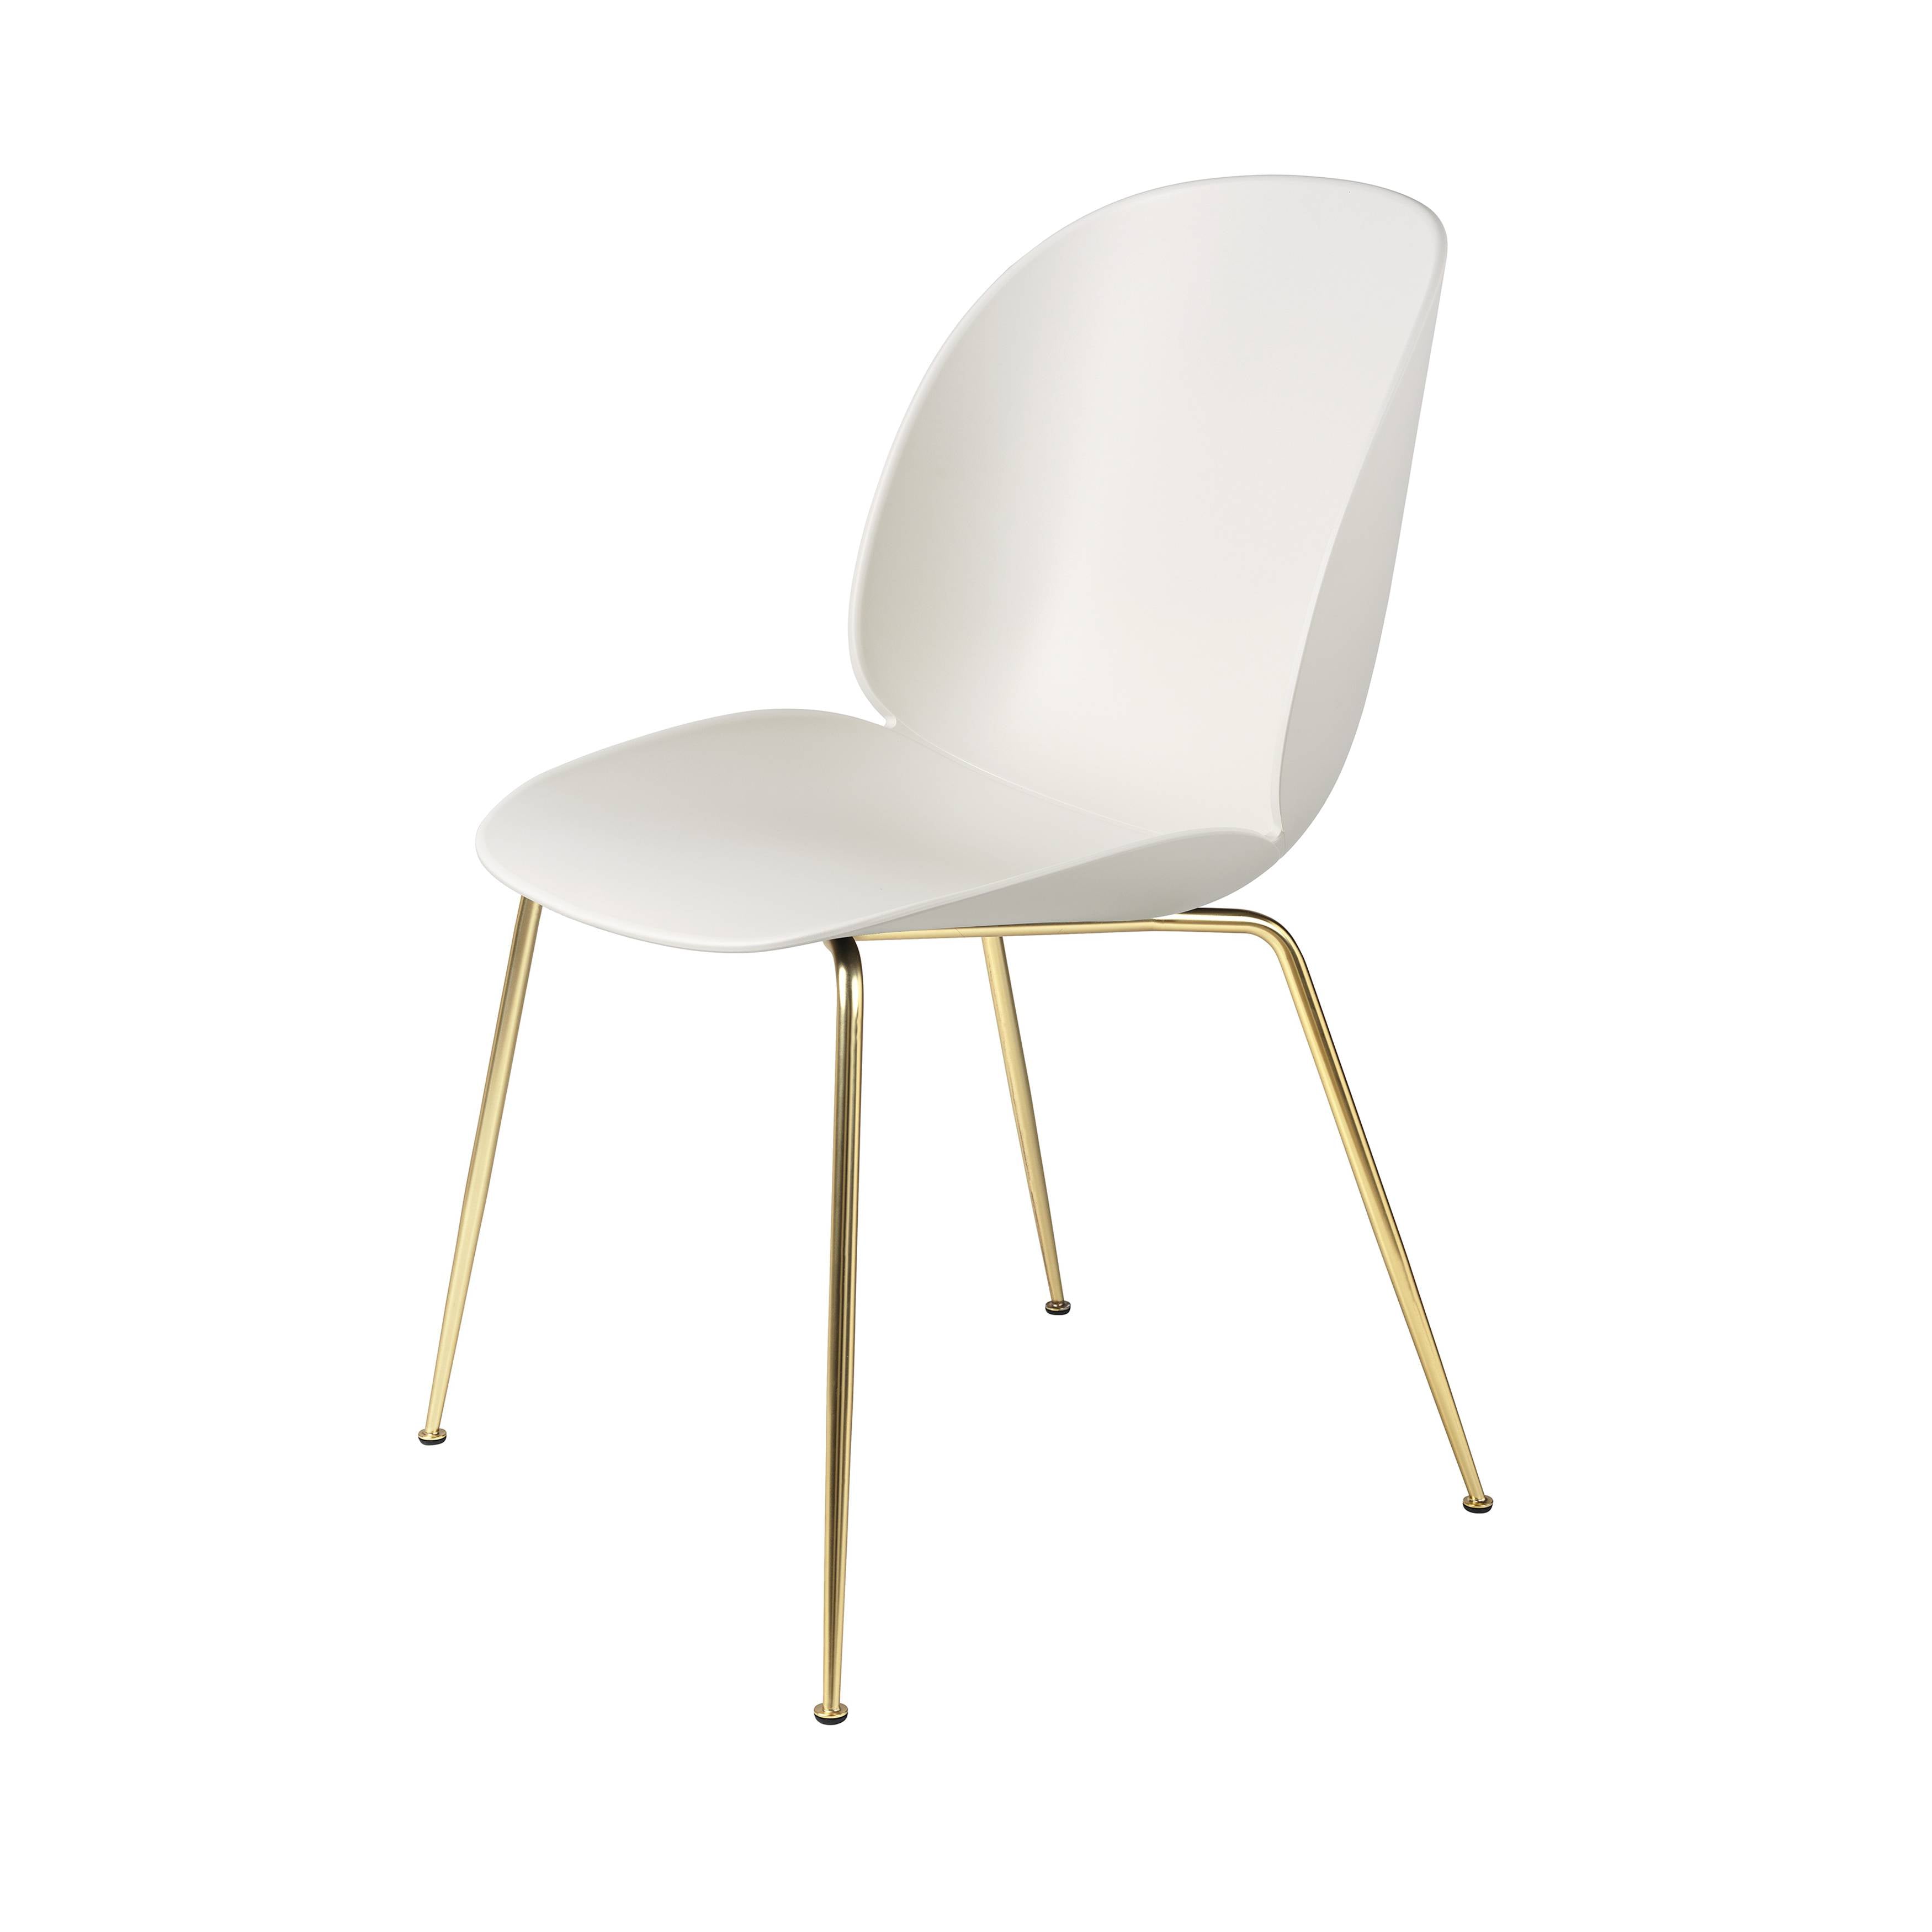 Beetle Dining Chair: Conic Base + Alabaster White + Brass Semi Matt + Felt Glides